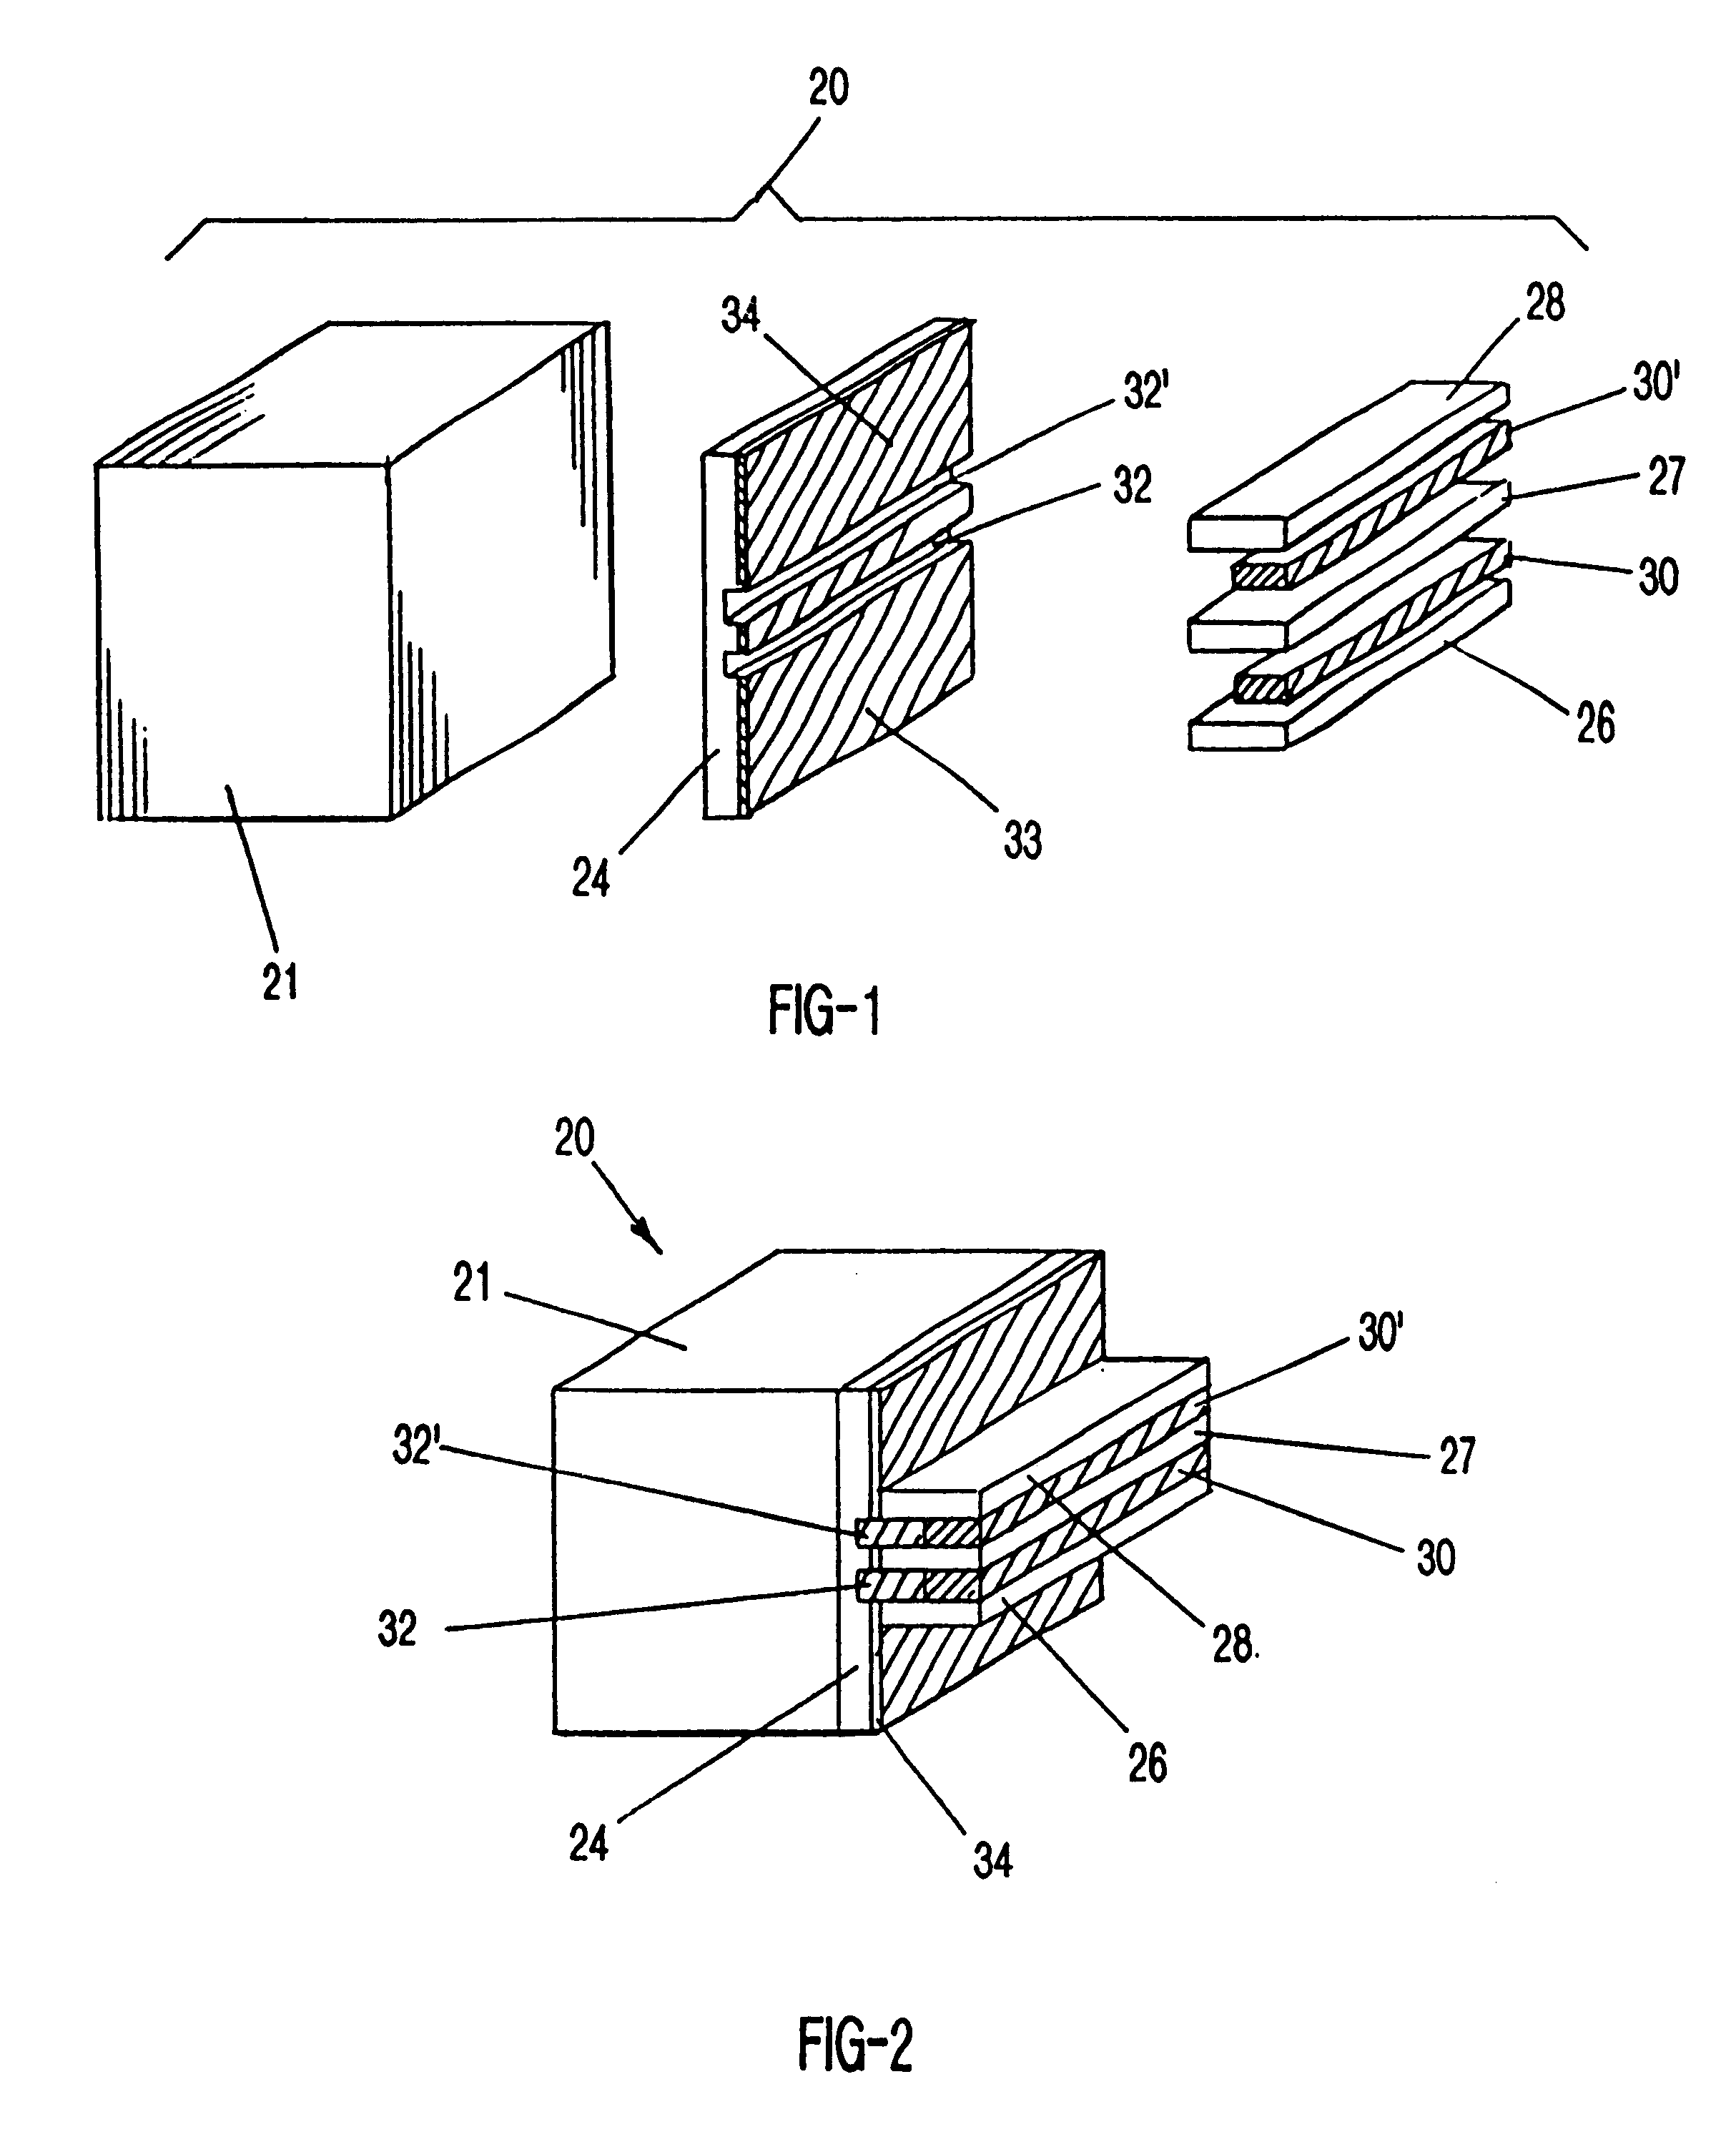 Method for modular laser diode assembly